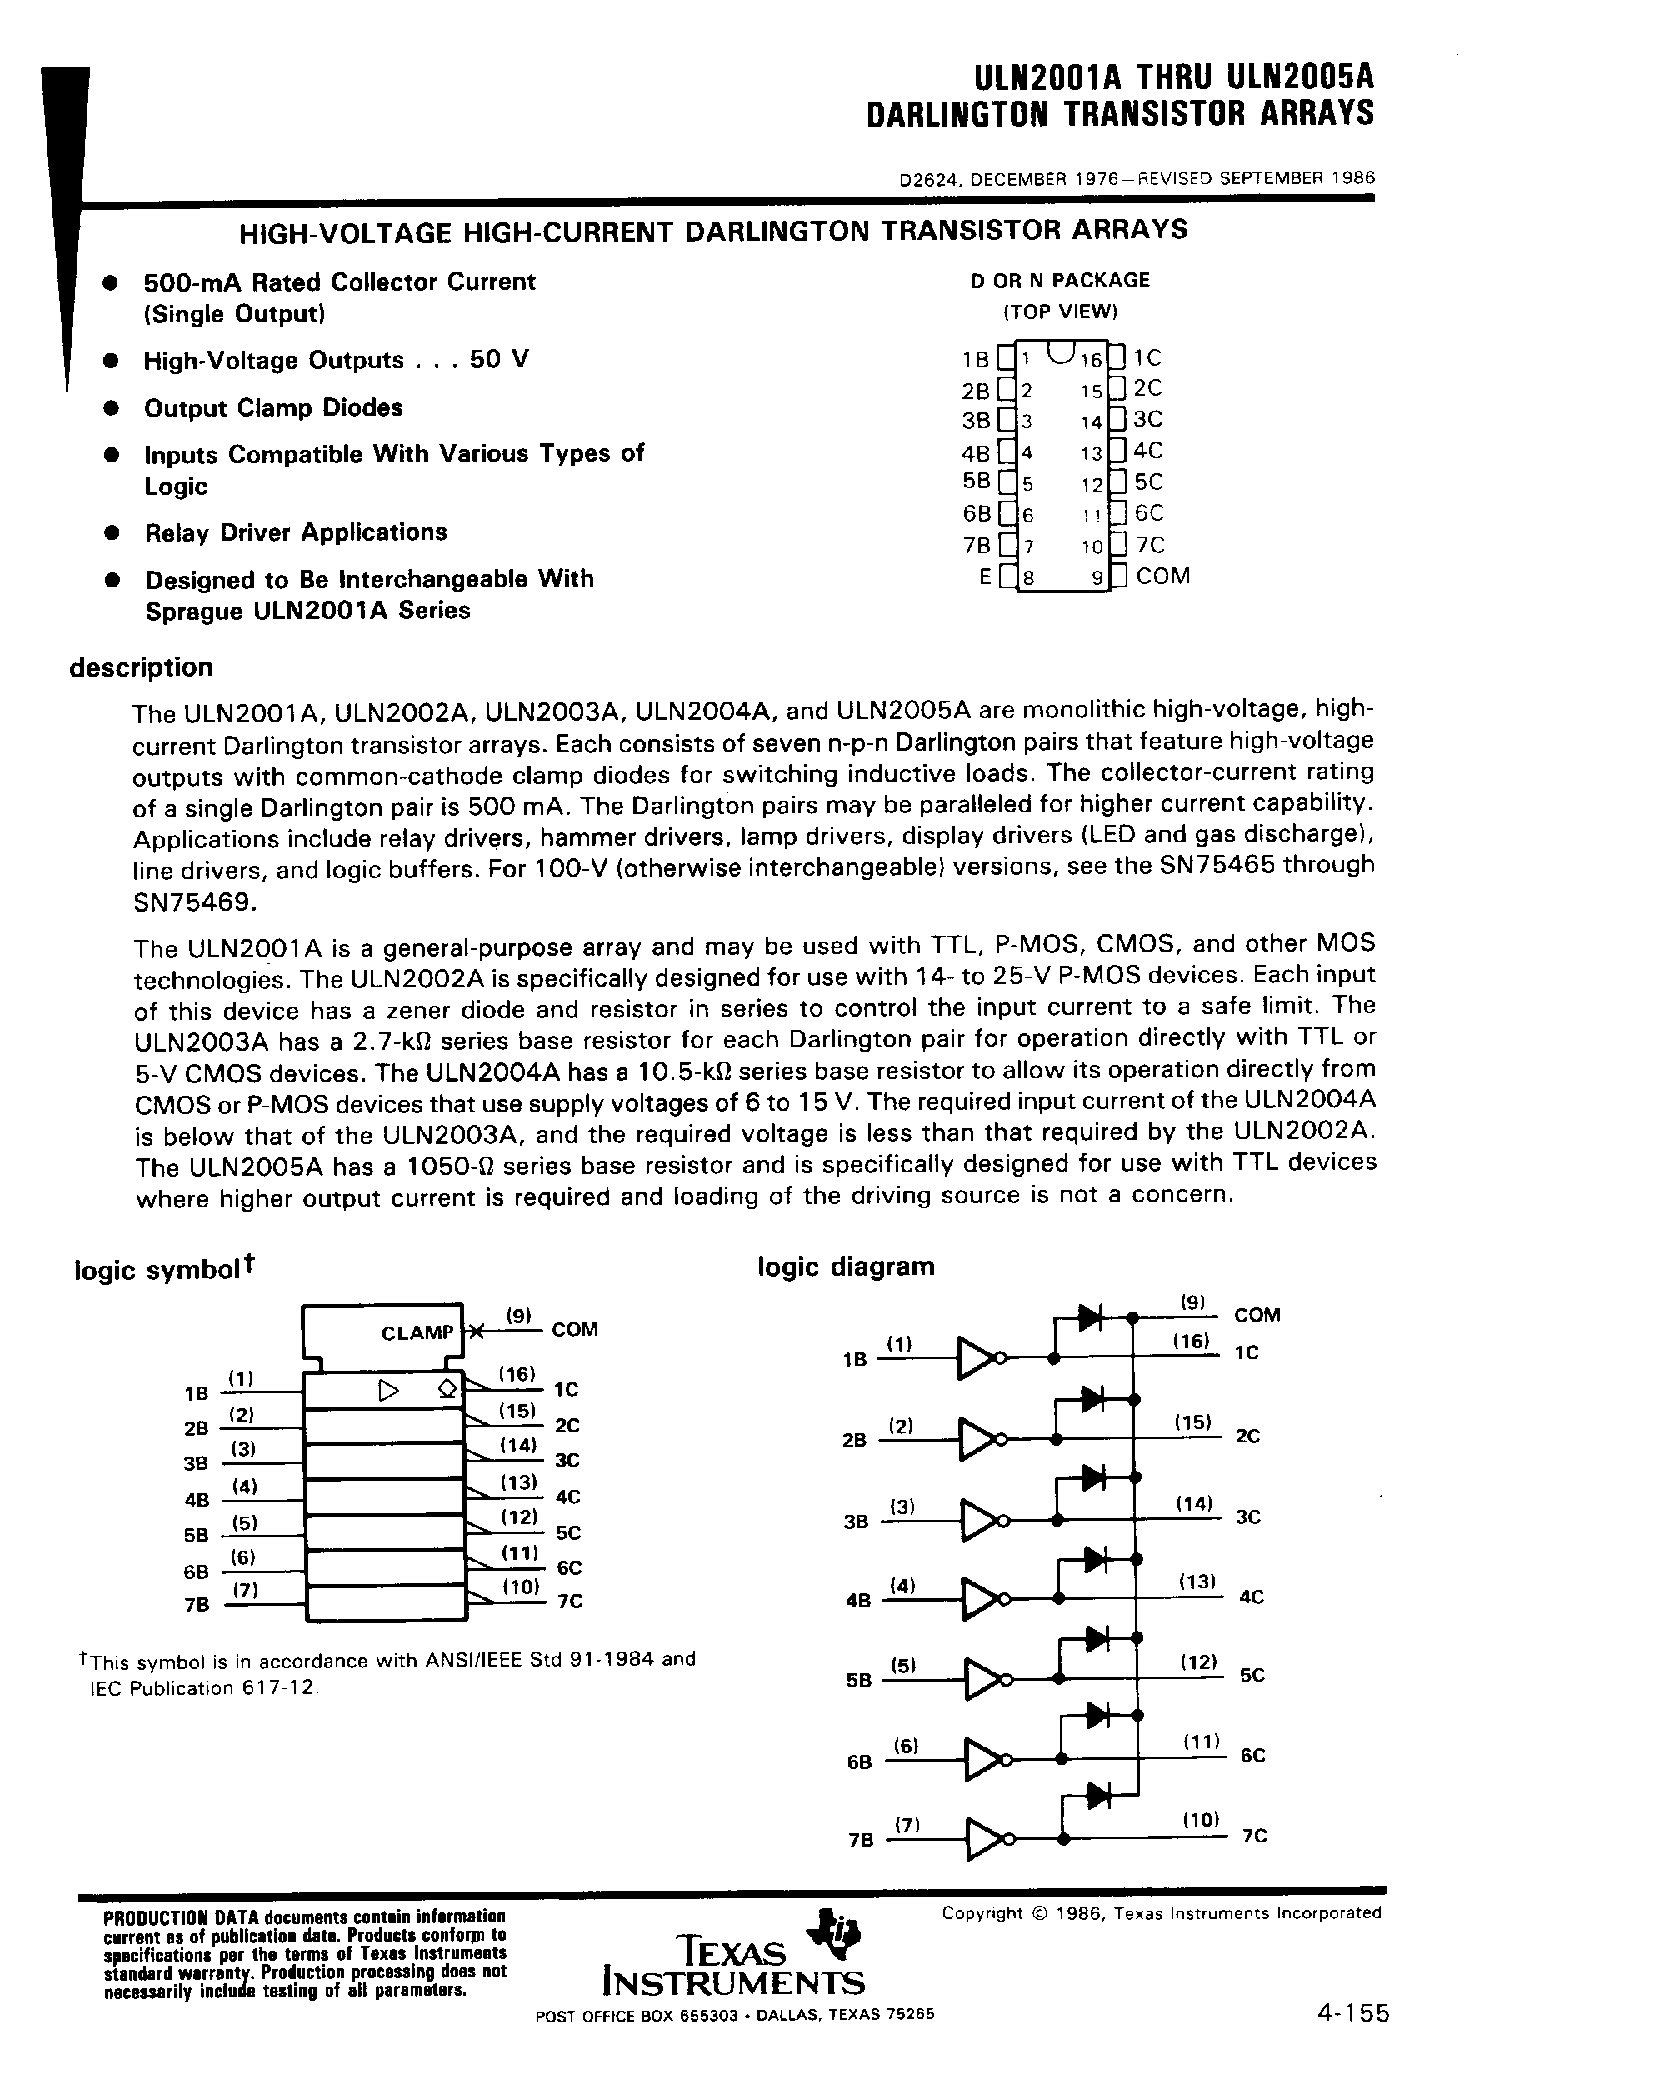 Datasheet ULN2005A - (ULN2001A - ULN2005A) Darlington Transistor Arrays page 1